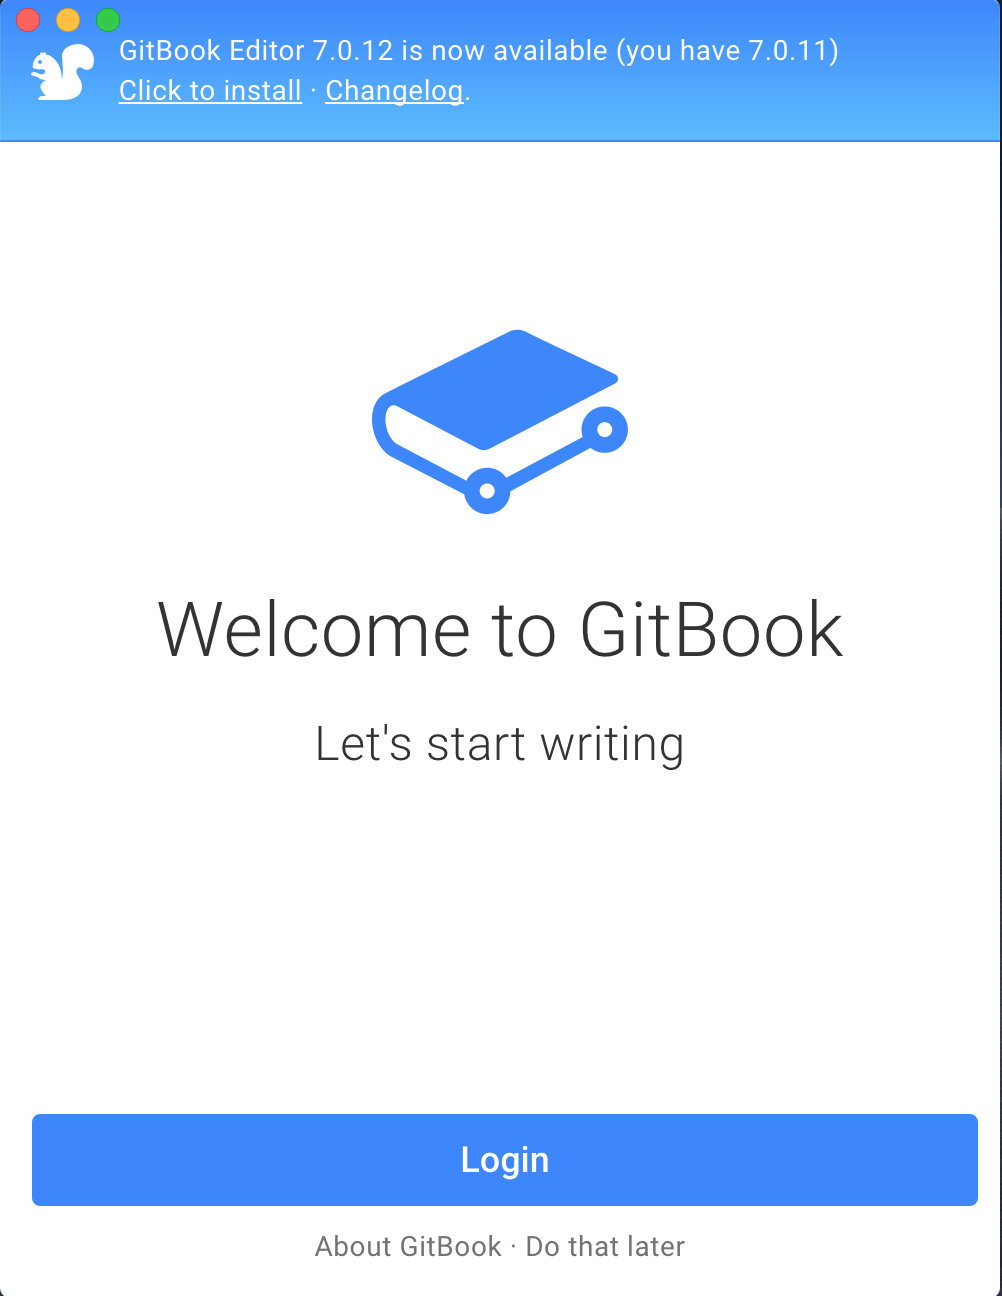 gitbook-editor-welcome.png